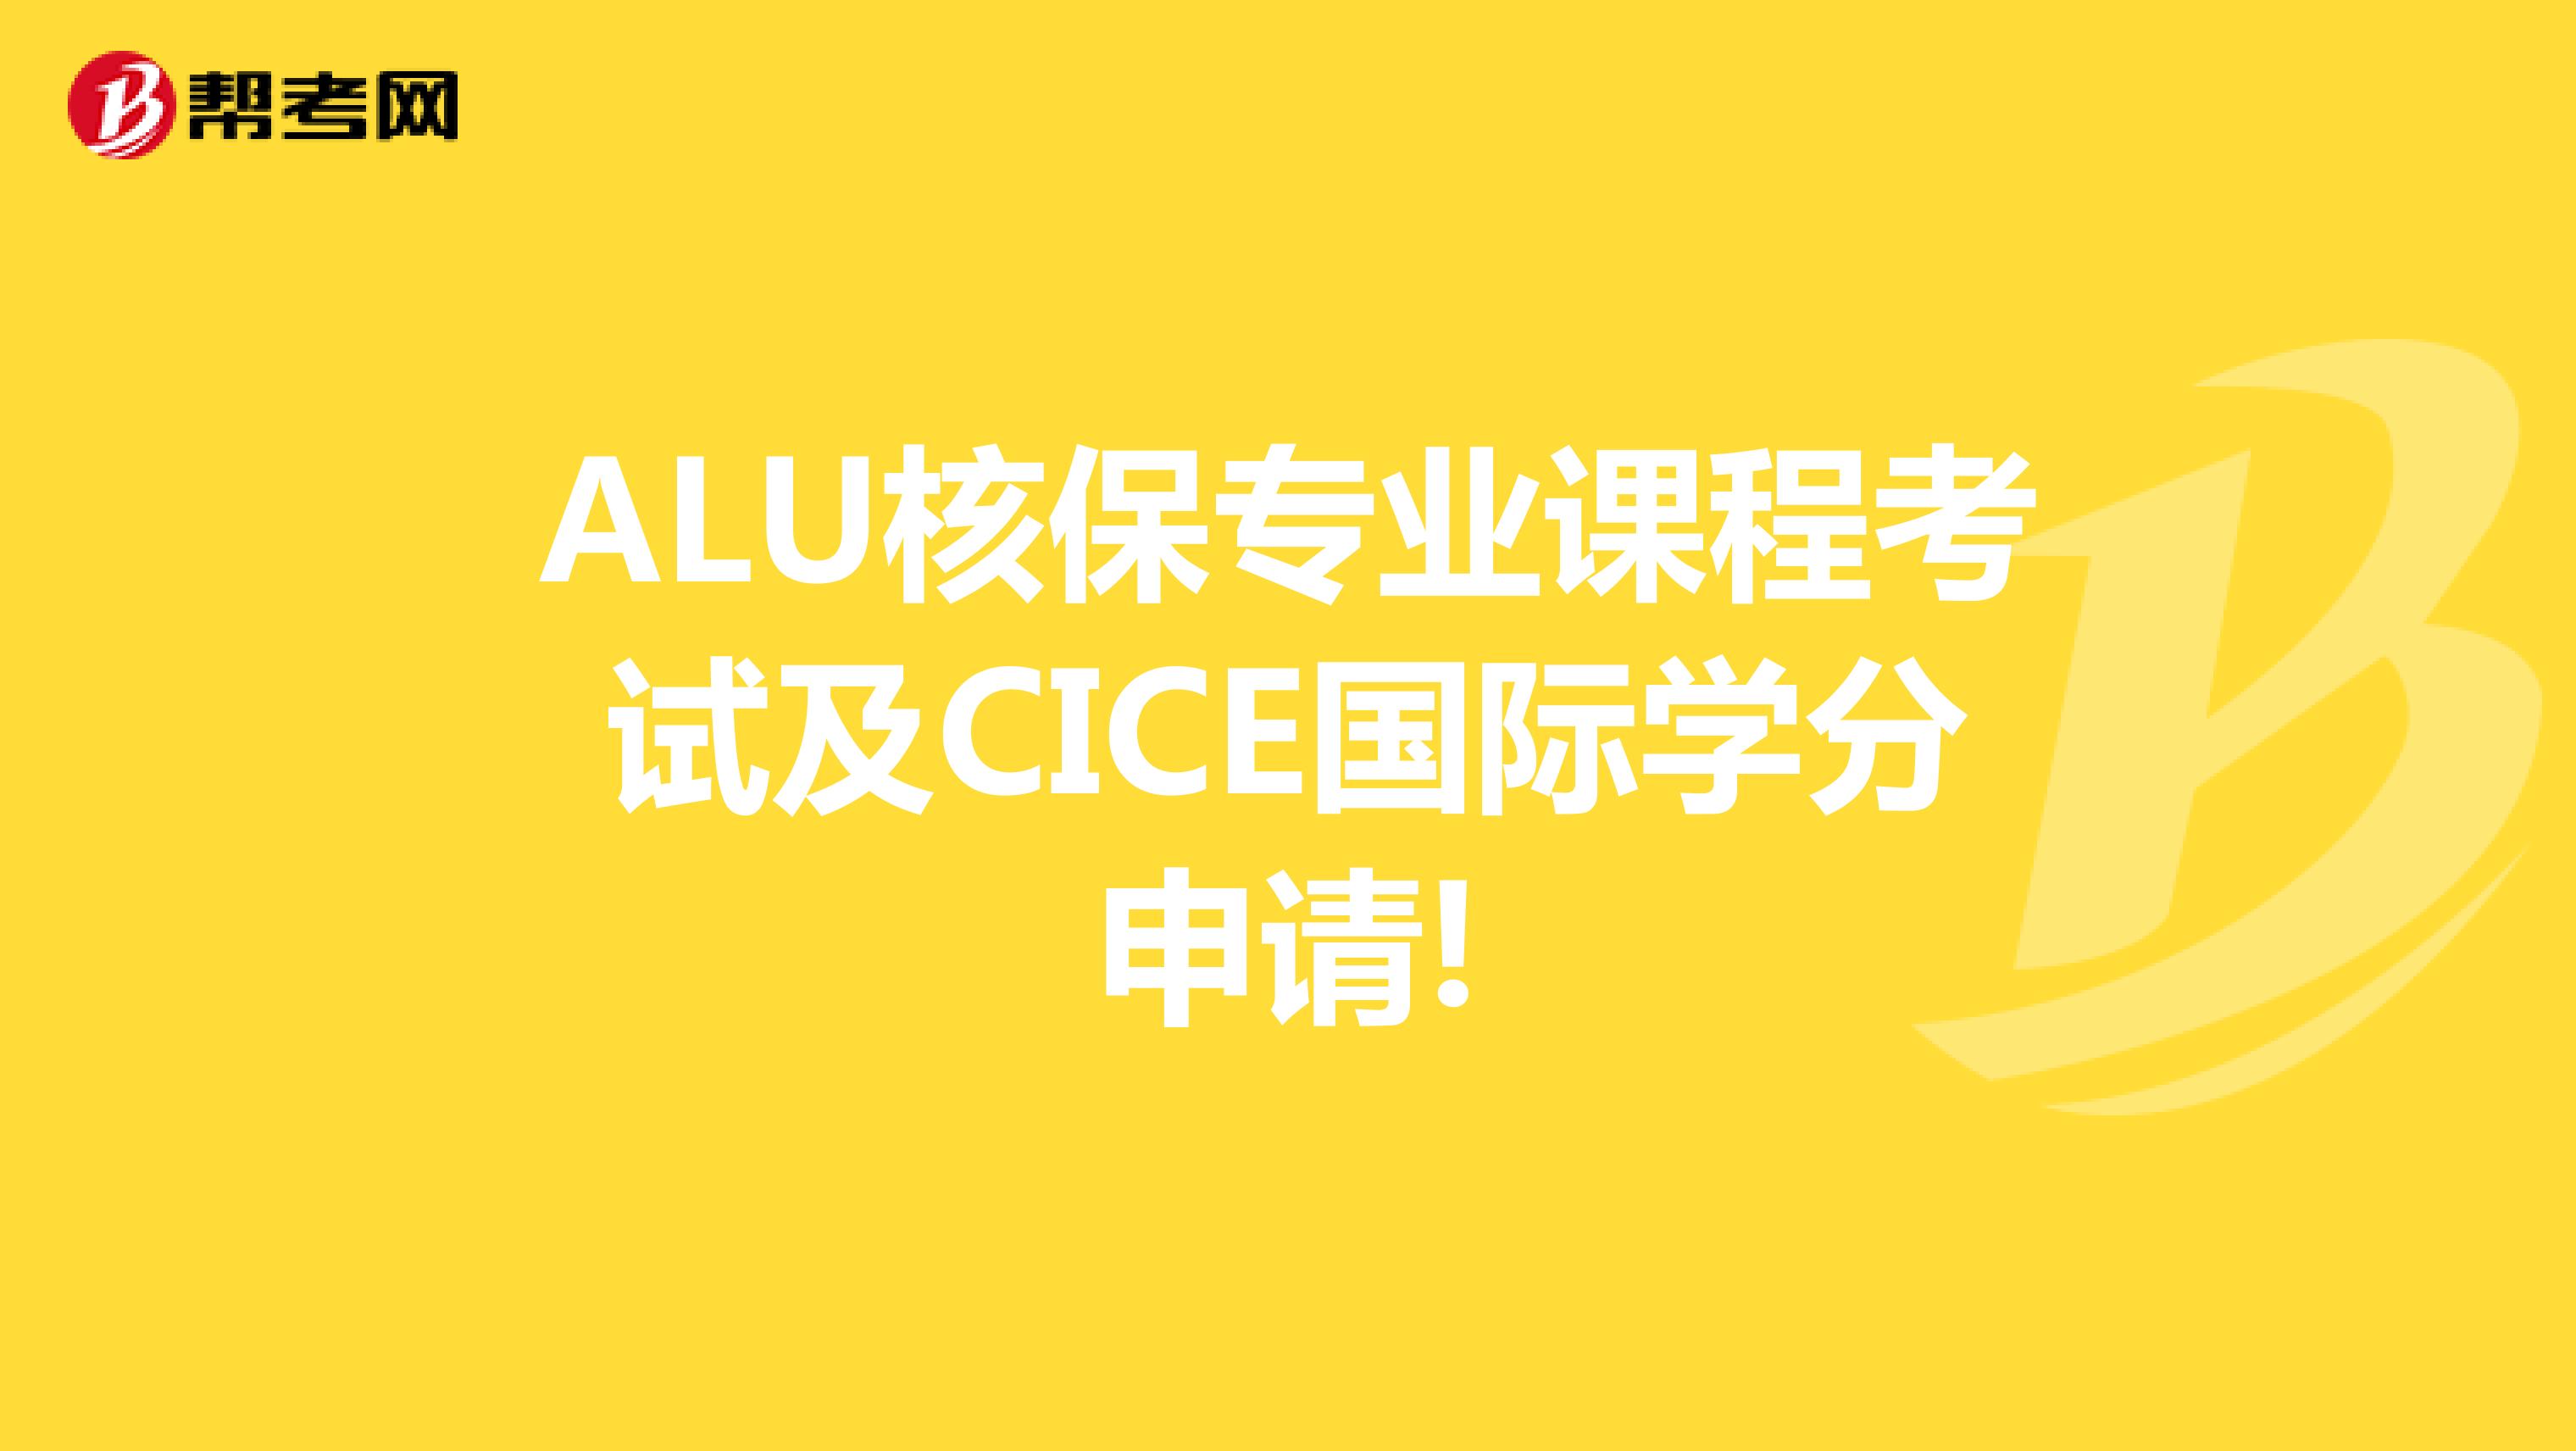 ALU核保专业课程考试及CICE国际学分申请!